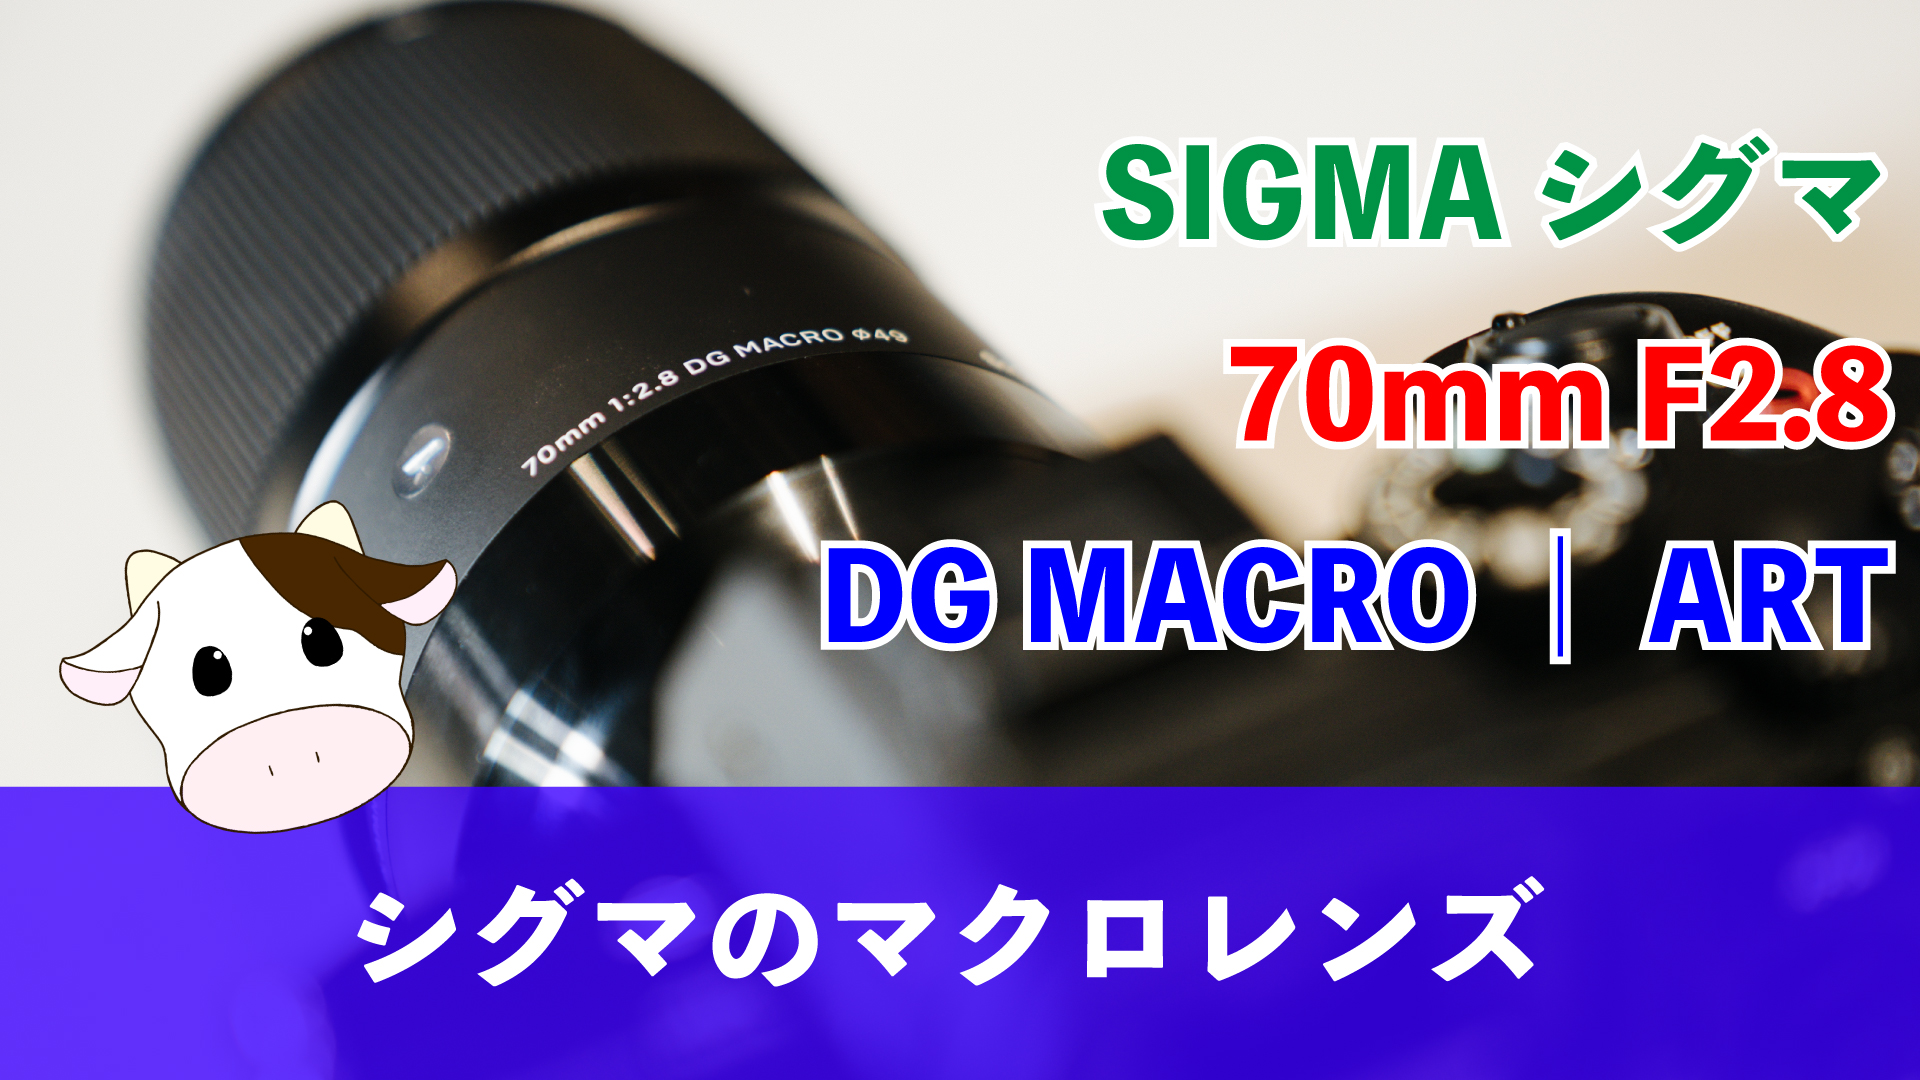 Sigama-70mm-f2.8-Macro-開封&テスト 使用レビュー_アイキャッチ